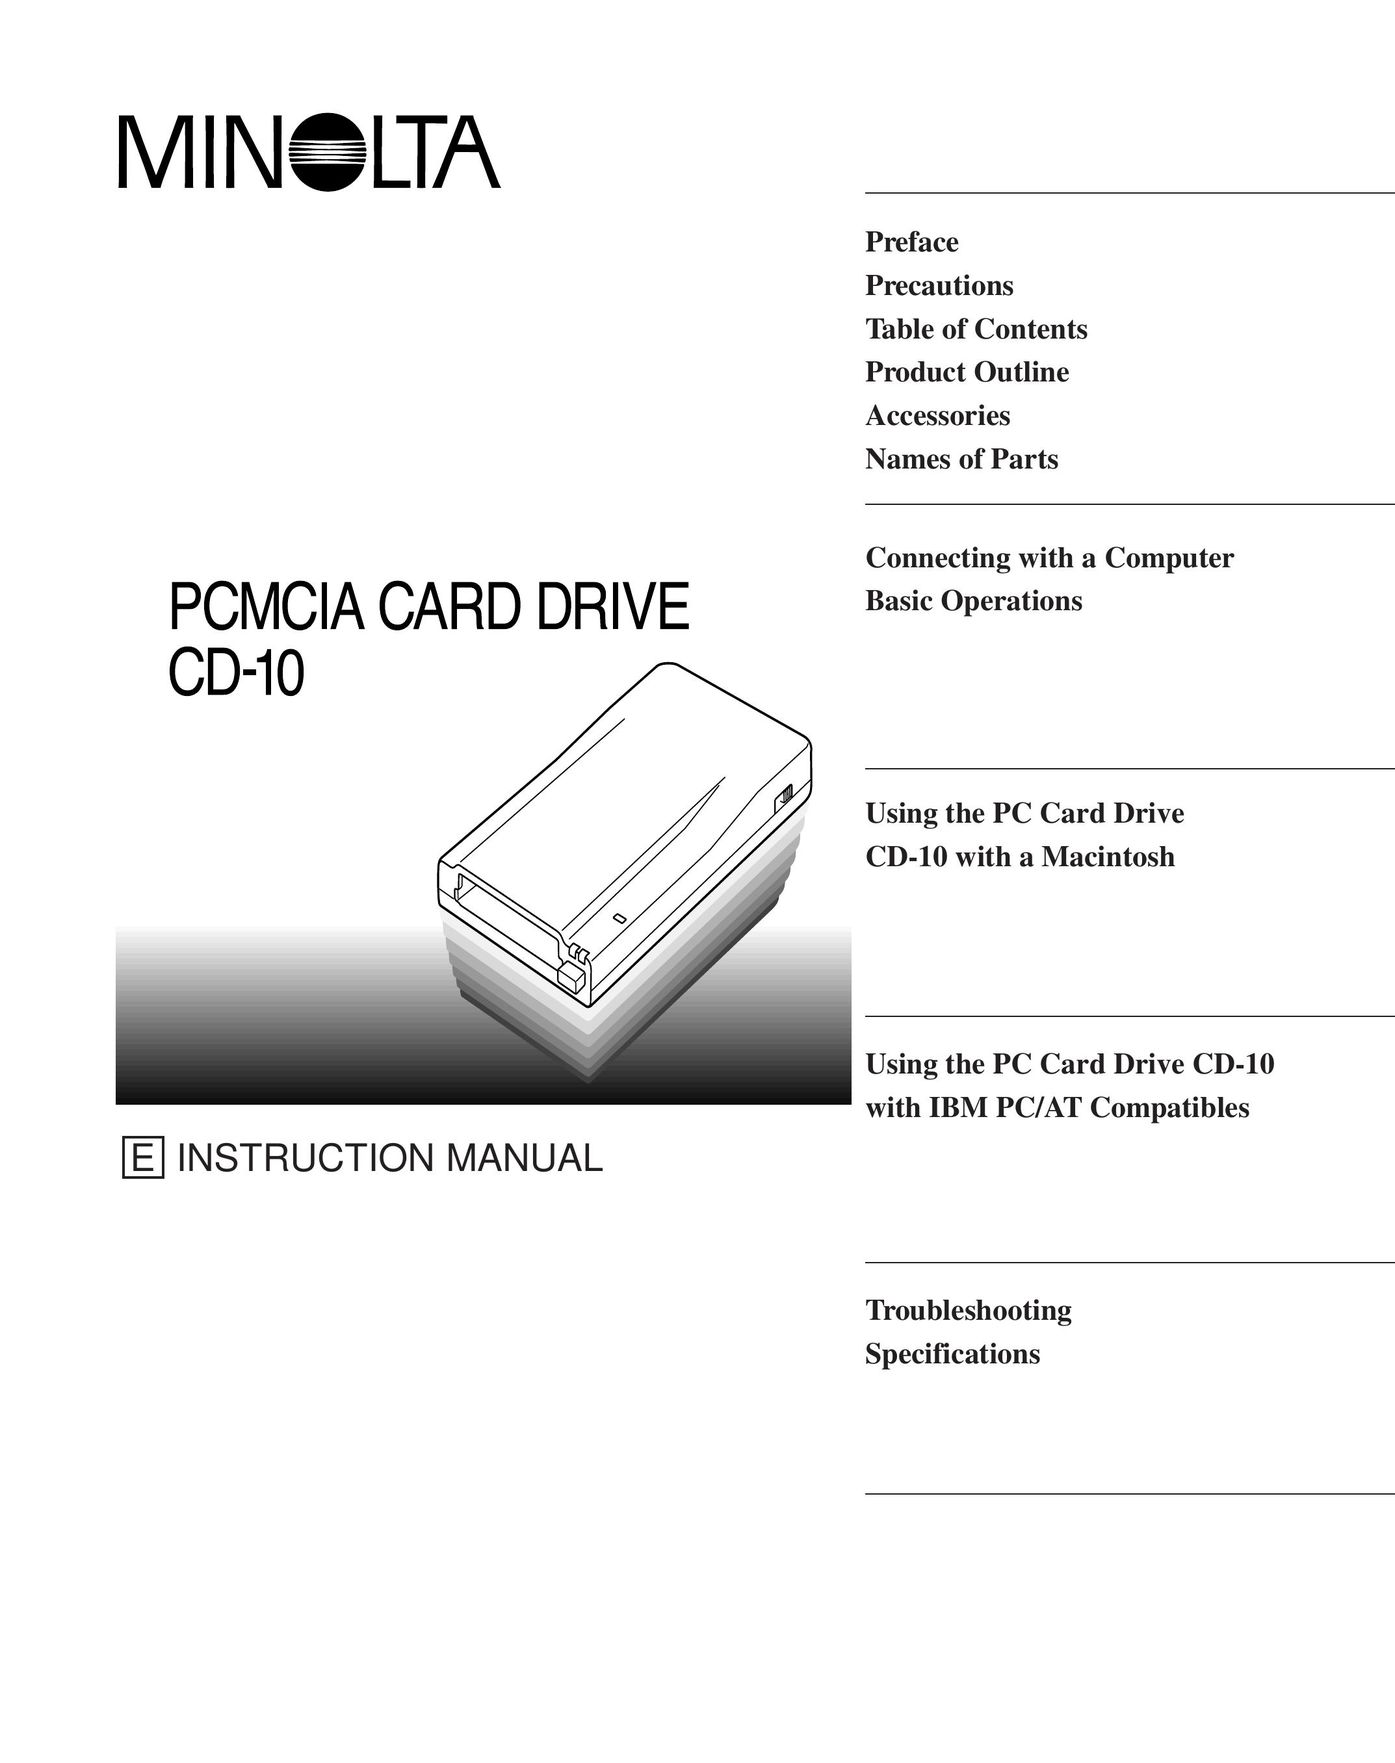 Minolta CD-10 Computer Drive User Manual